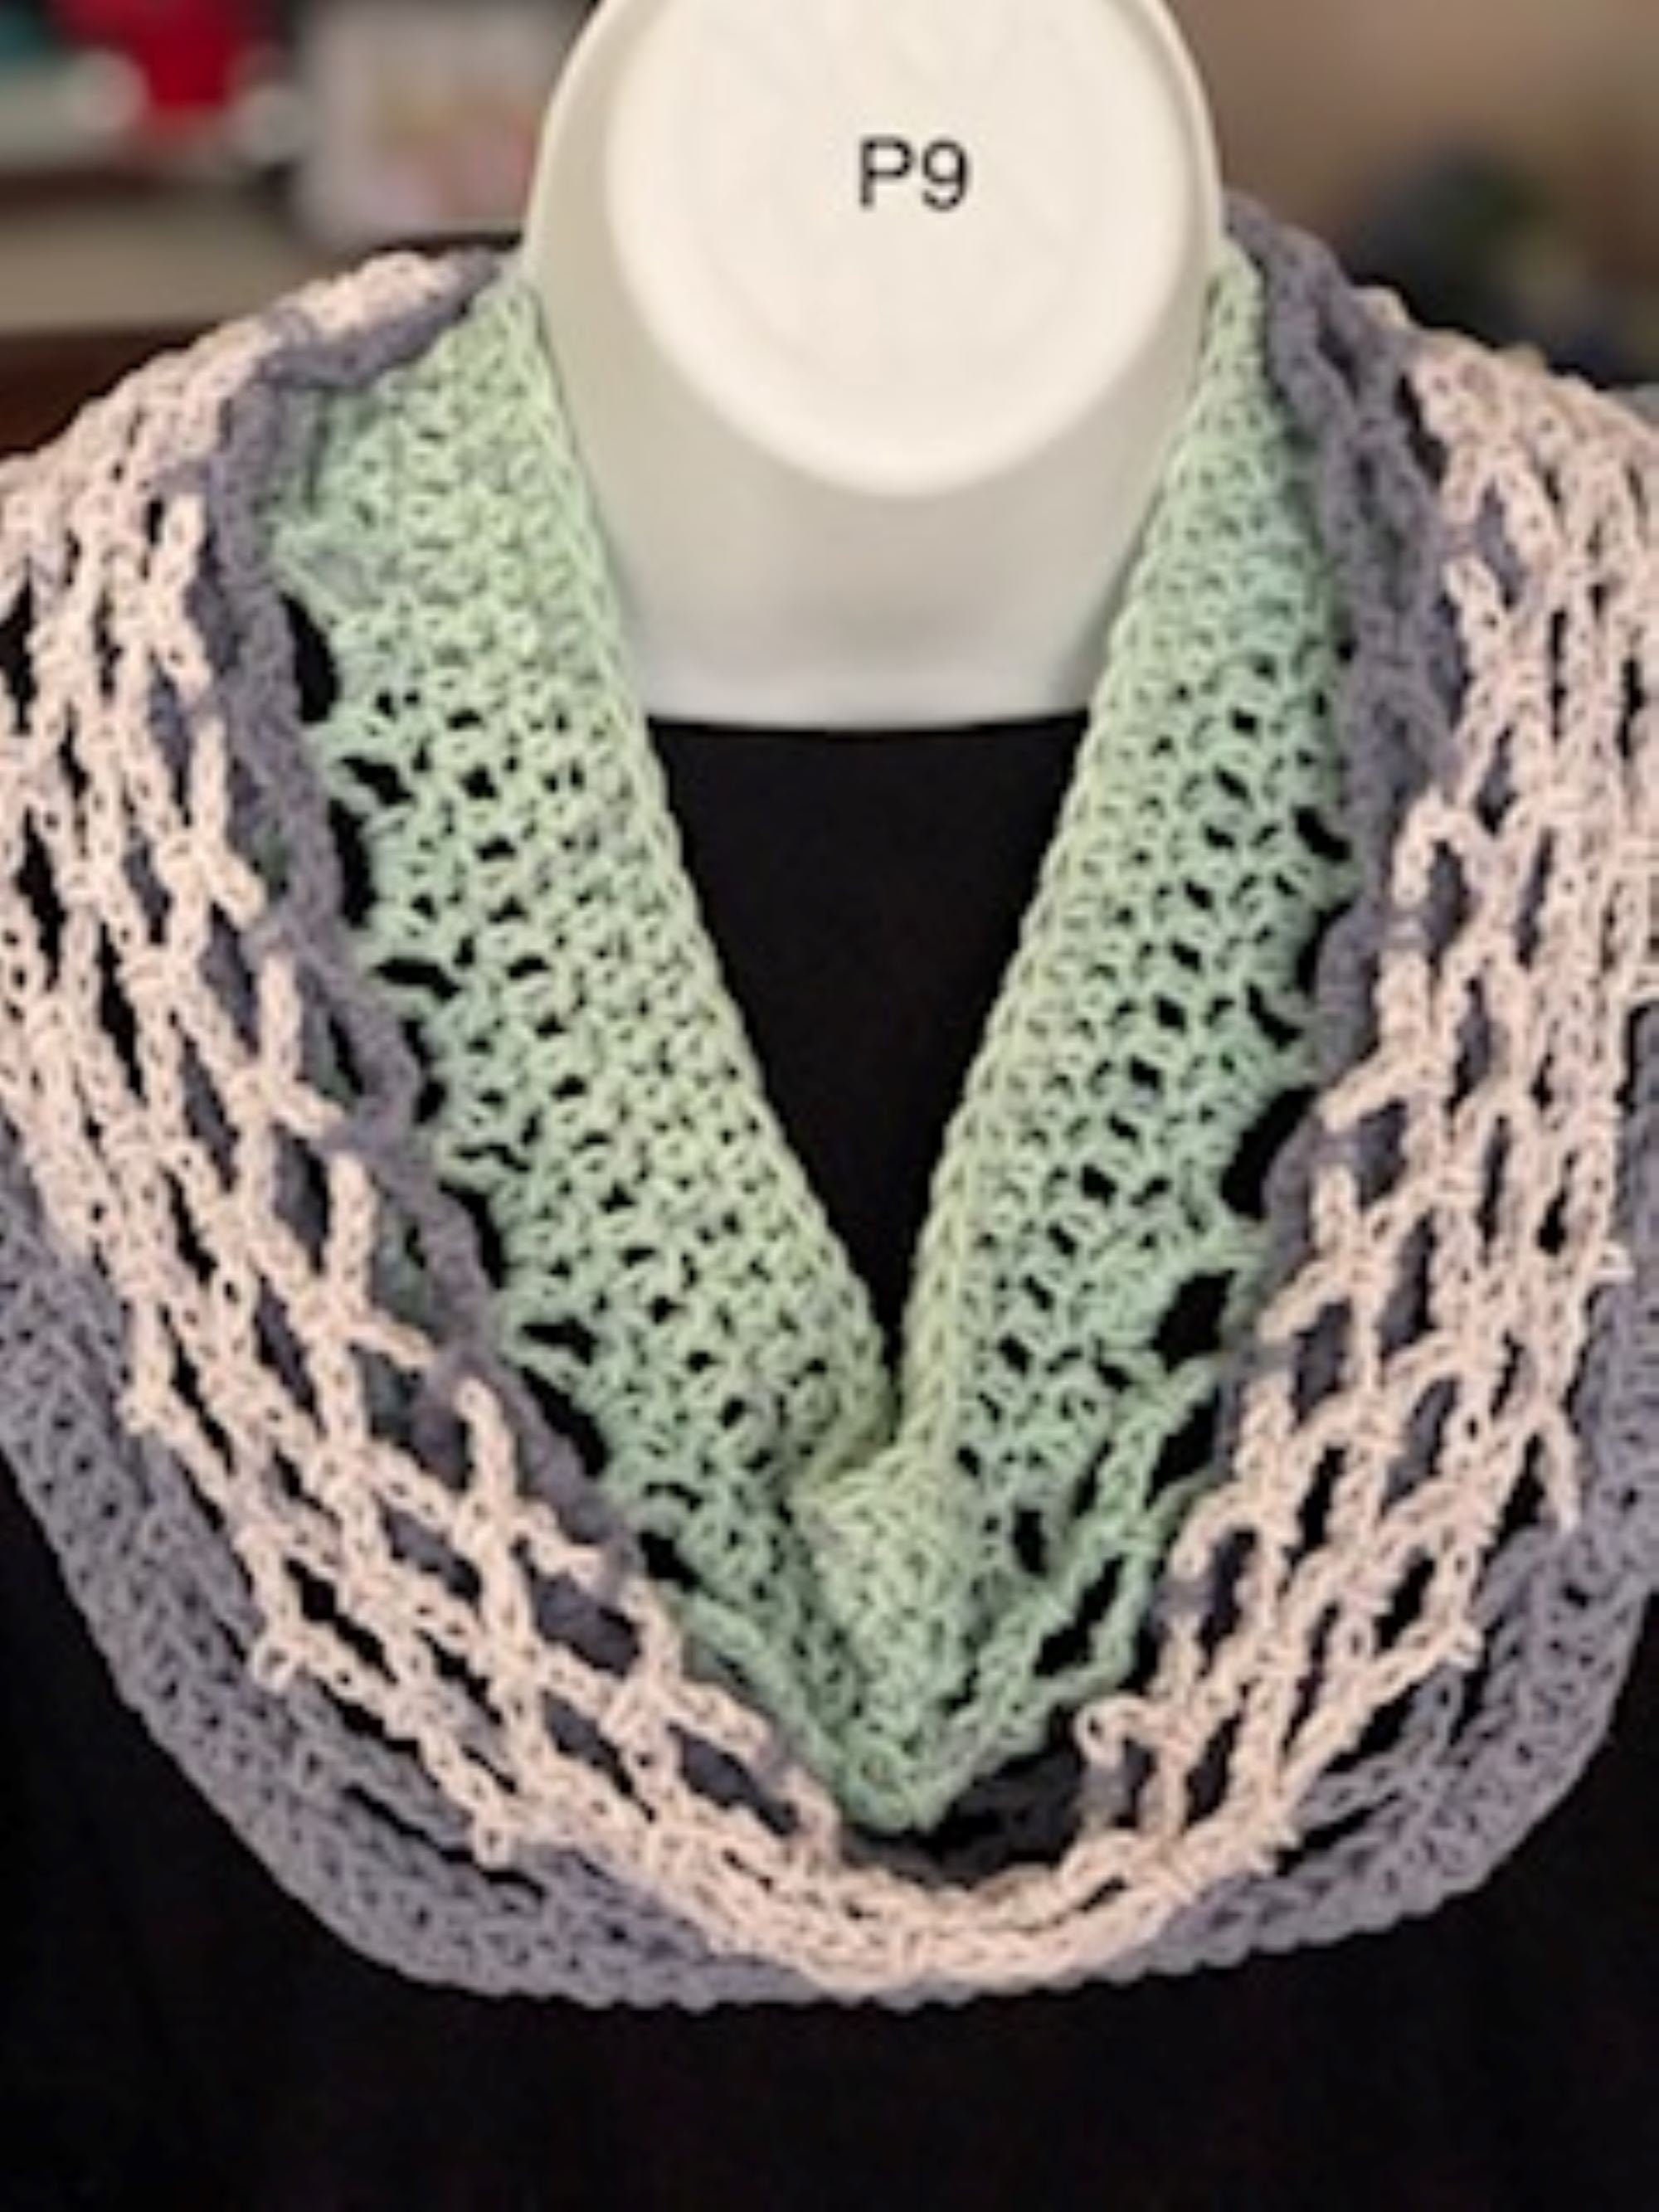 FINECE Baby Cotton, 60% Cotton 40% Acrylic Yarn, Fine (2) for Crochet and  Knitting 2 x 1.76 Oz (2 x 50g) / 2 x 180 Yrds (2 x 165m), Soft Yarn